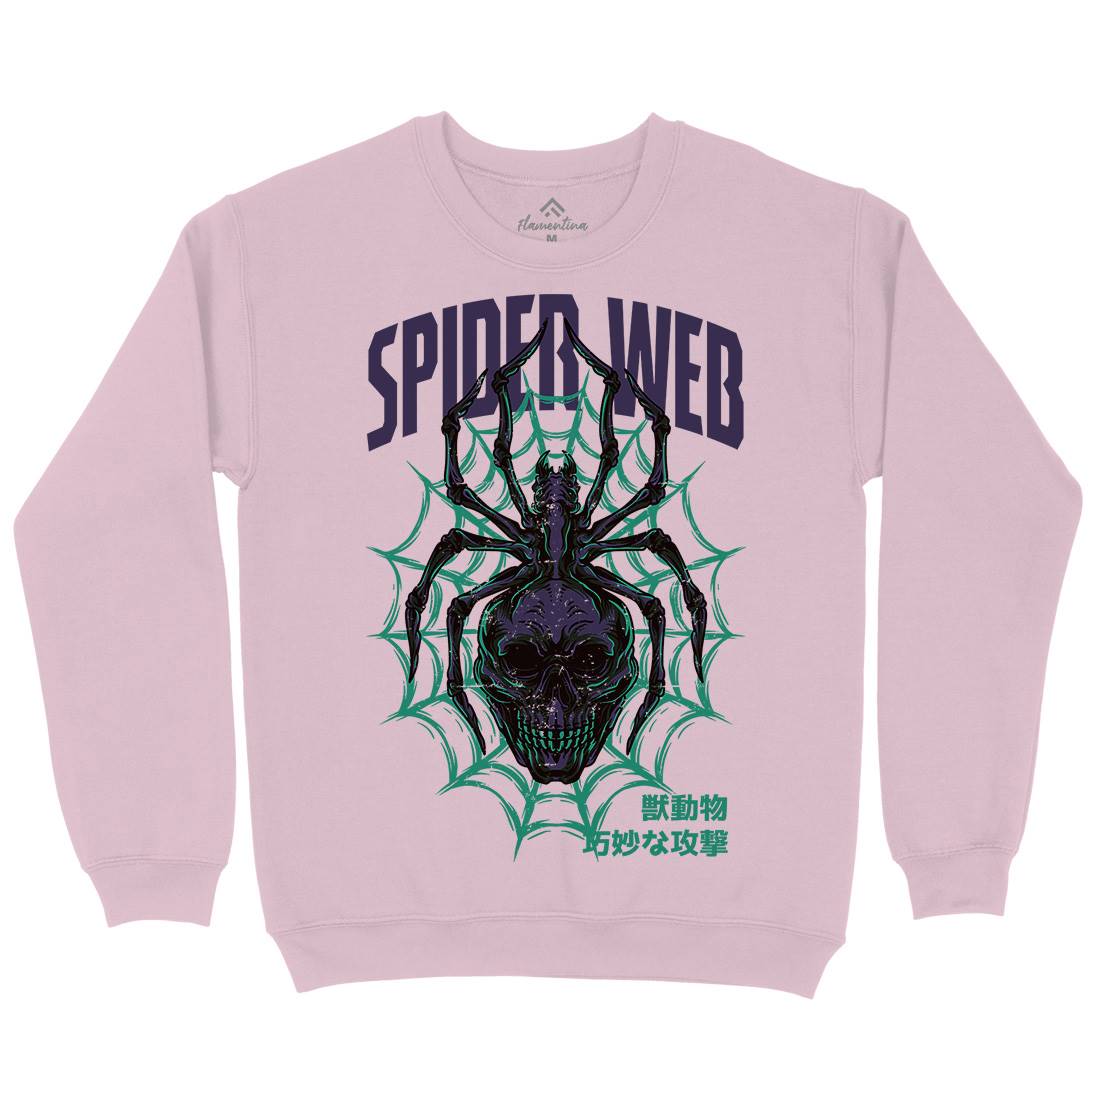 Spider Web Kids Crew Neck Sweatshirt Horror D830